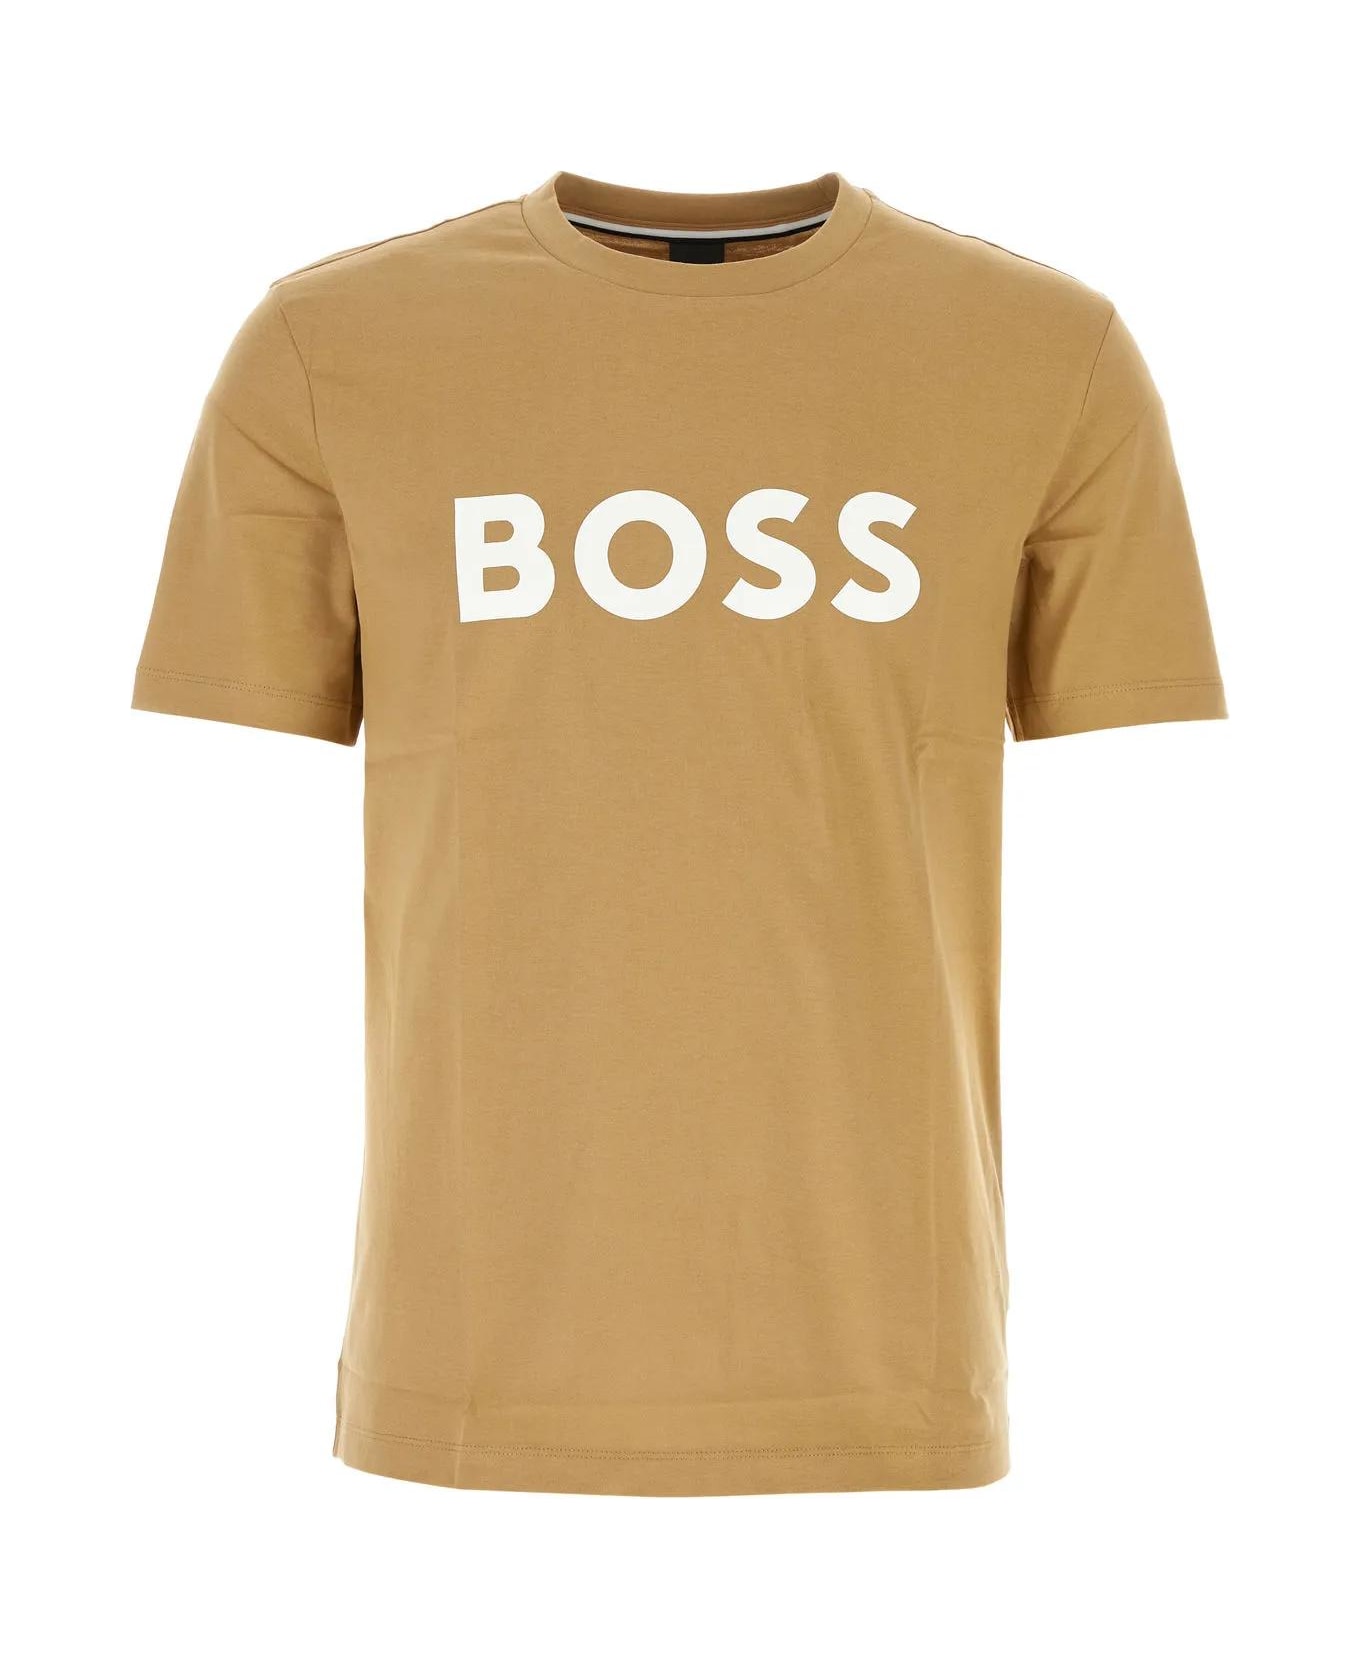 Hugo Boss Camel Cotton T-shirt - Medium Beige シャツ